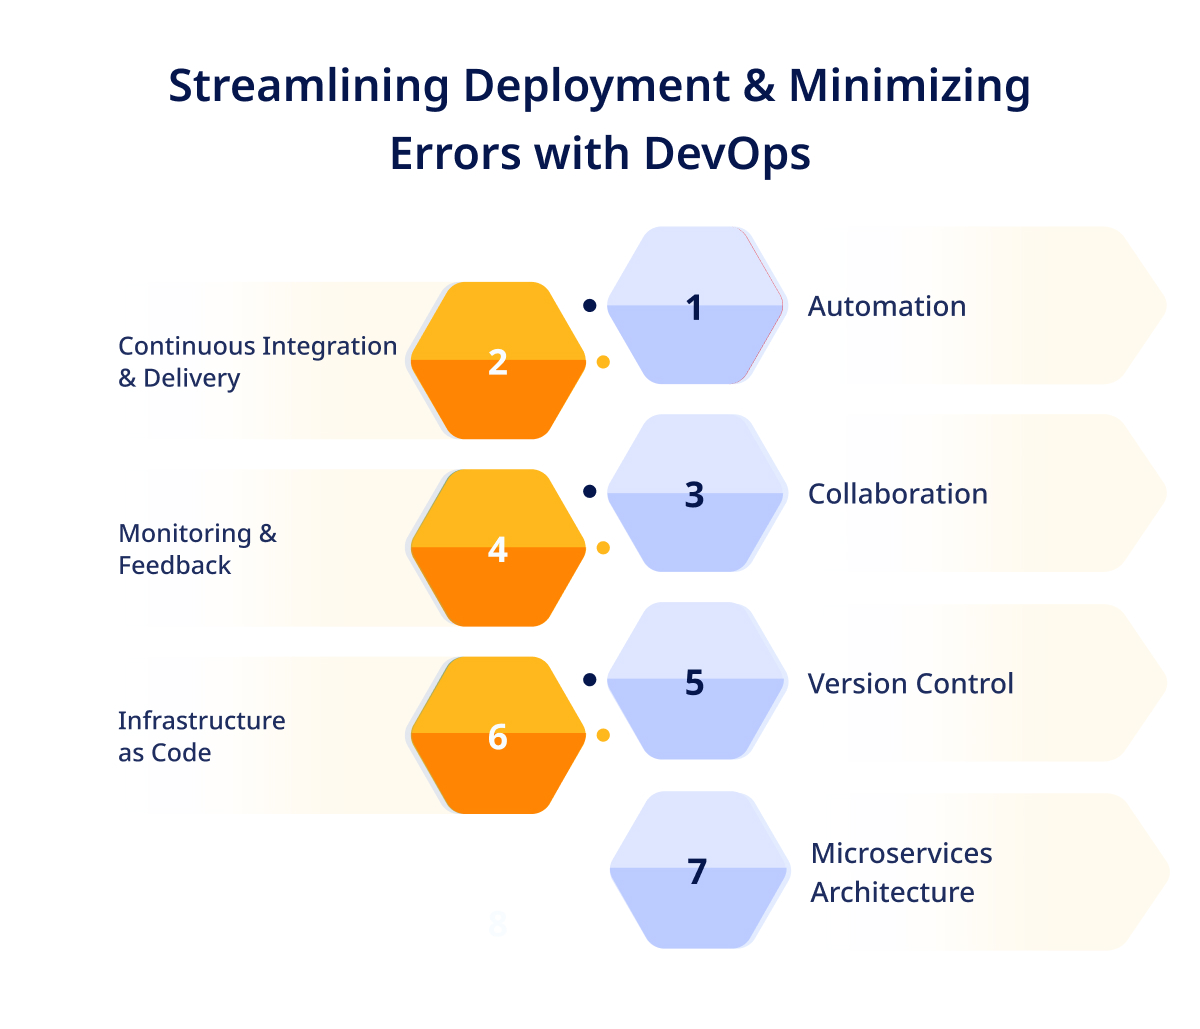 Streamlining Deployment & Minimizing Errors with DevOps